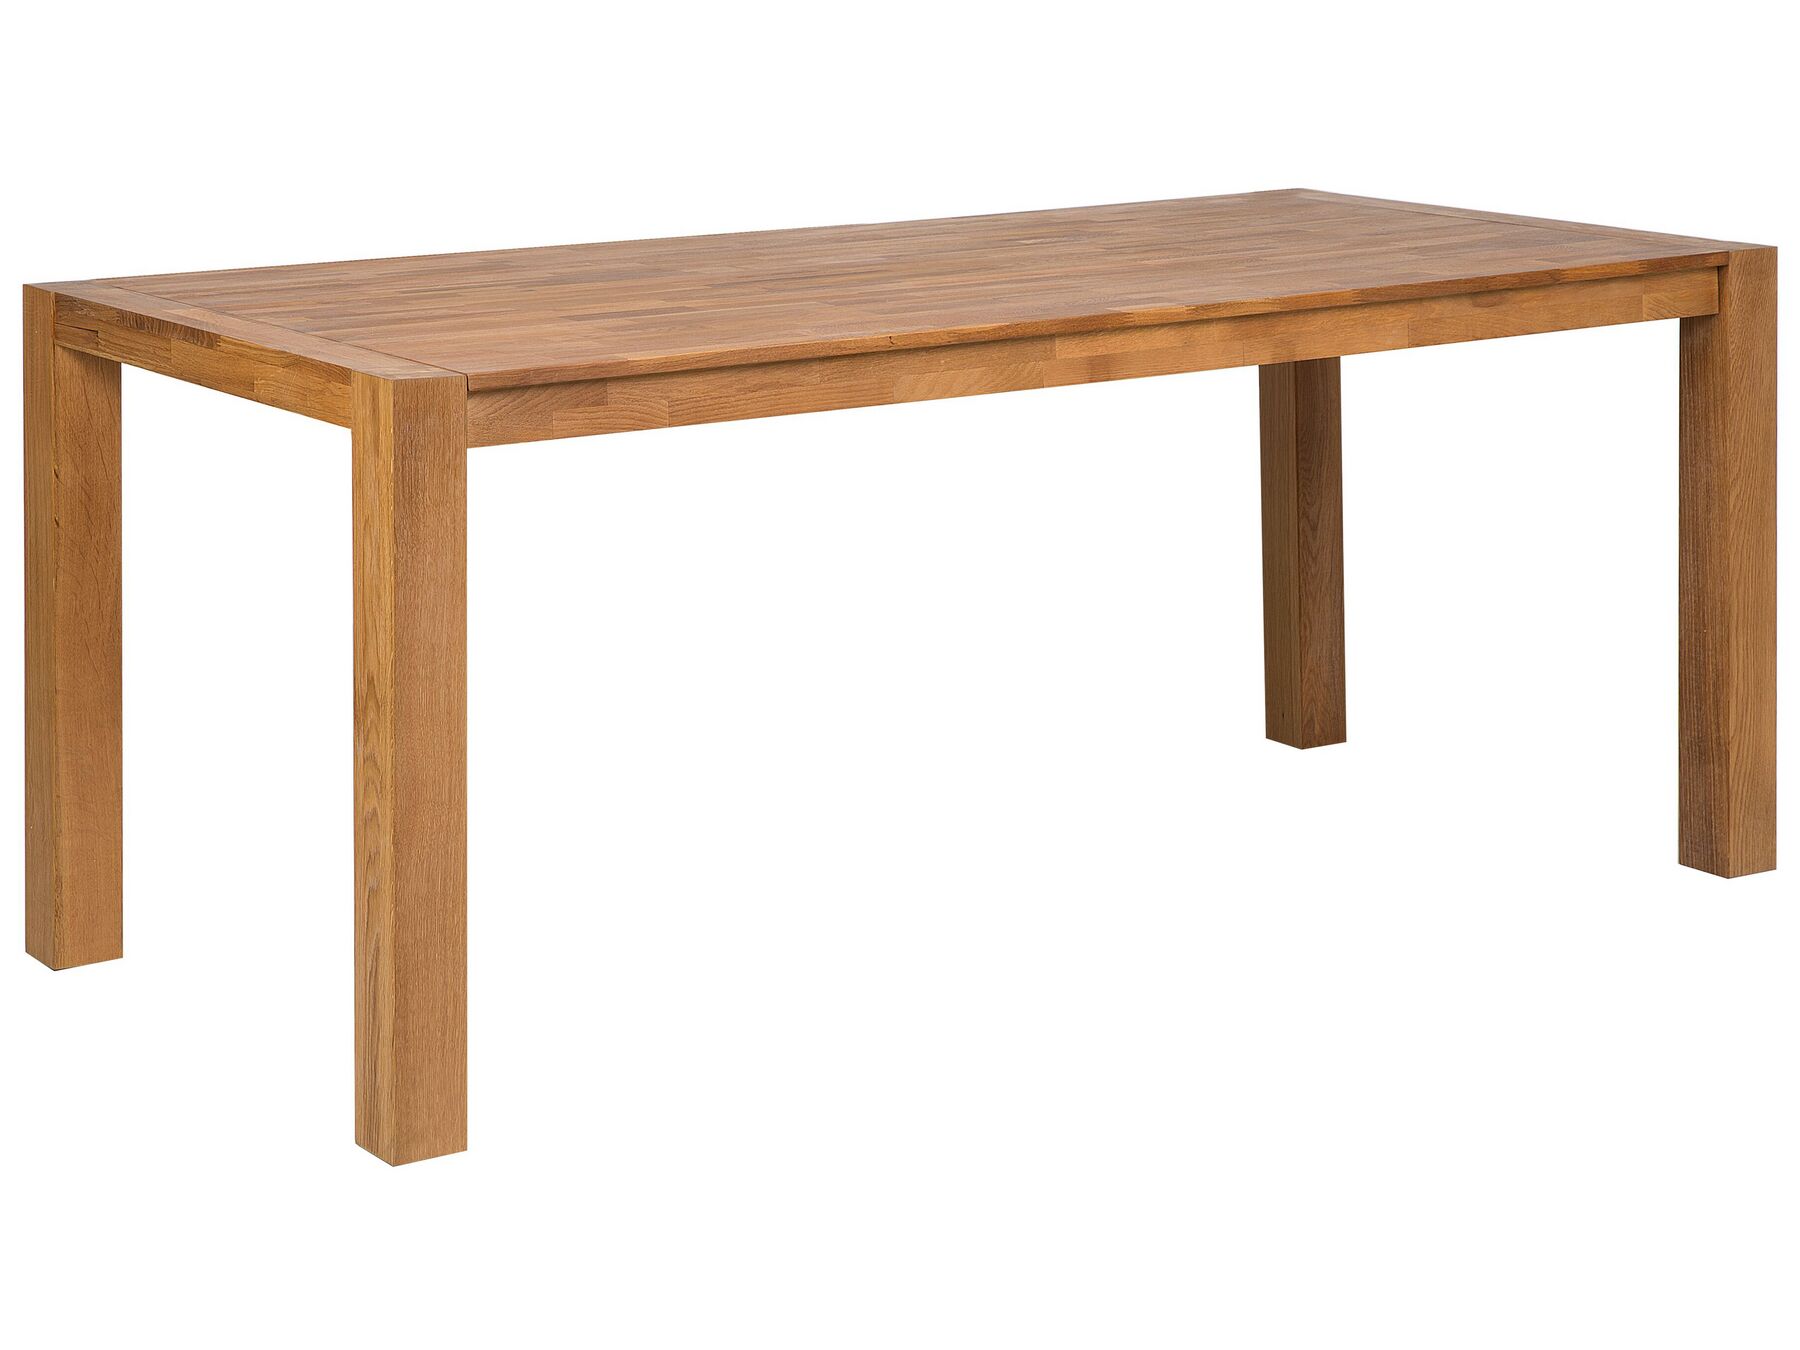 Oak Dining Table 180 x 85 cm Light Wood NATURA_380163